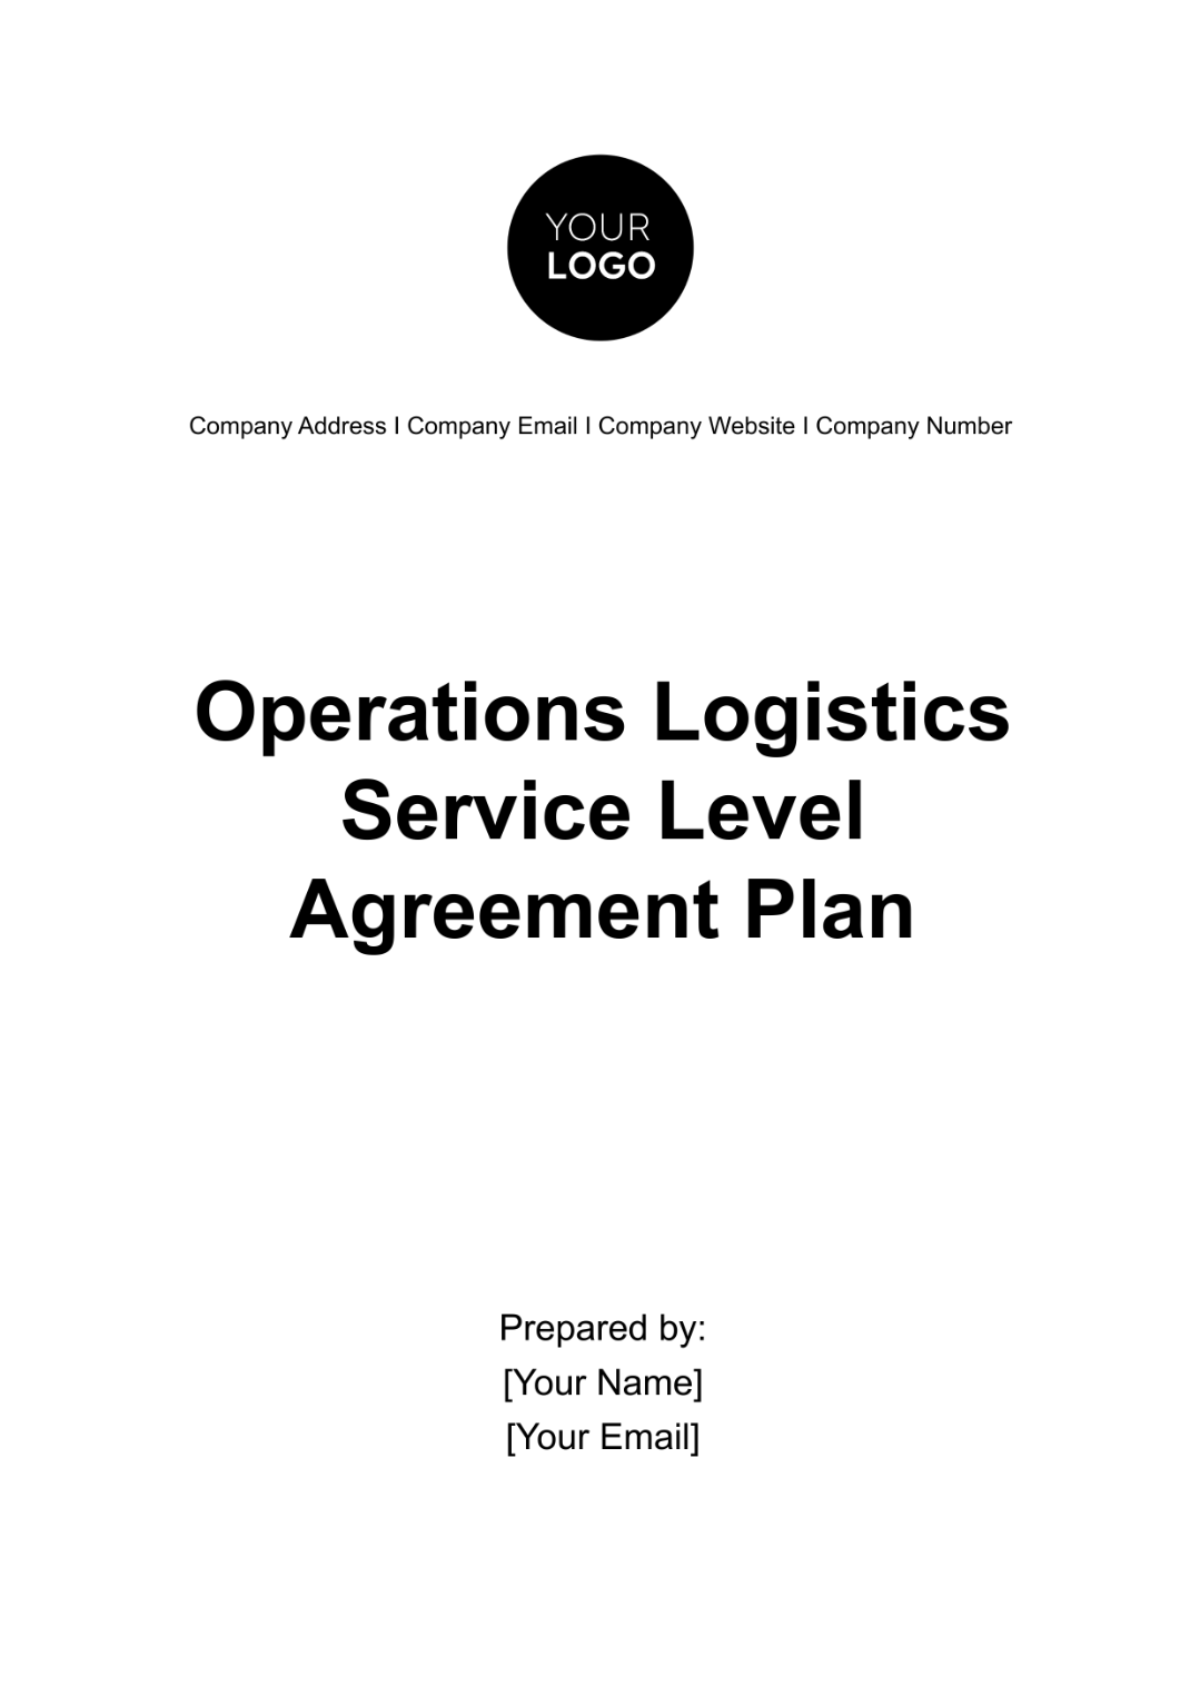 Operations Logistics Service Level Agreement Plan Template